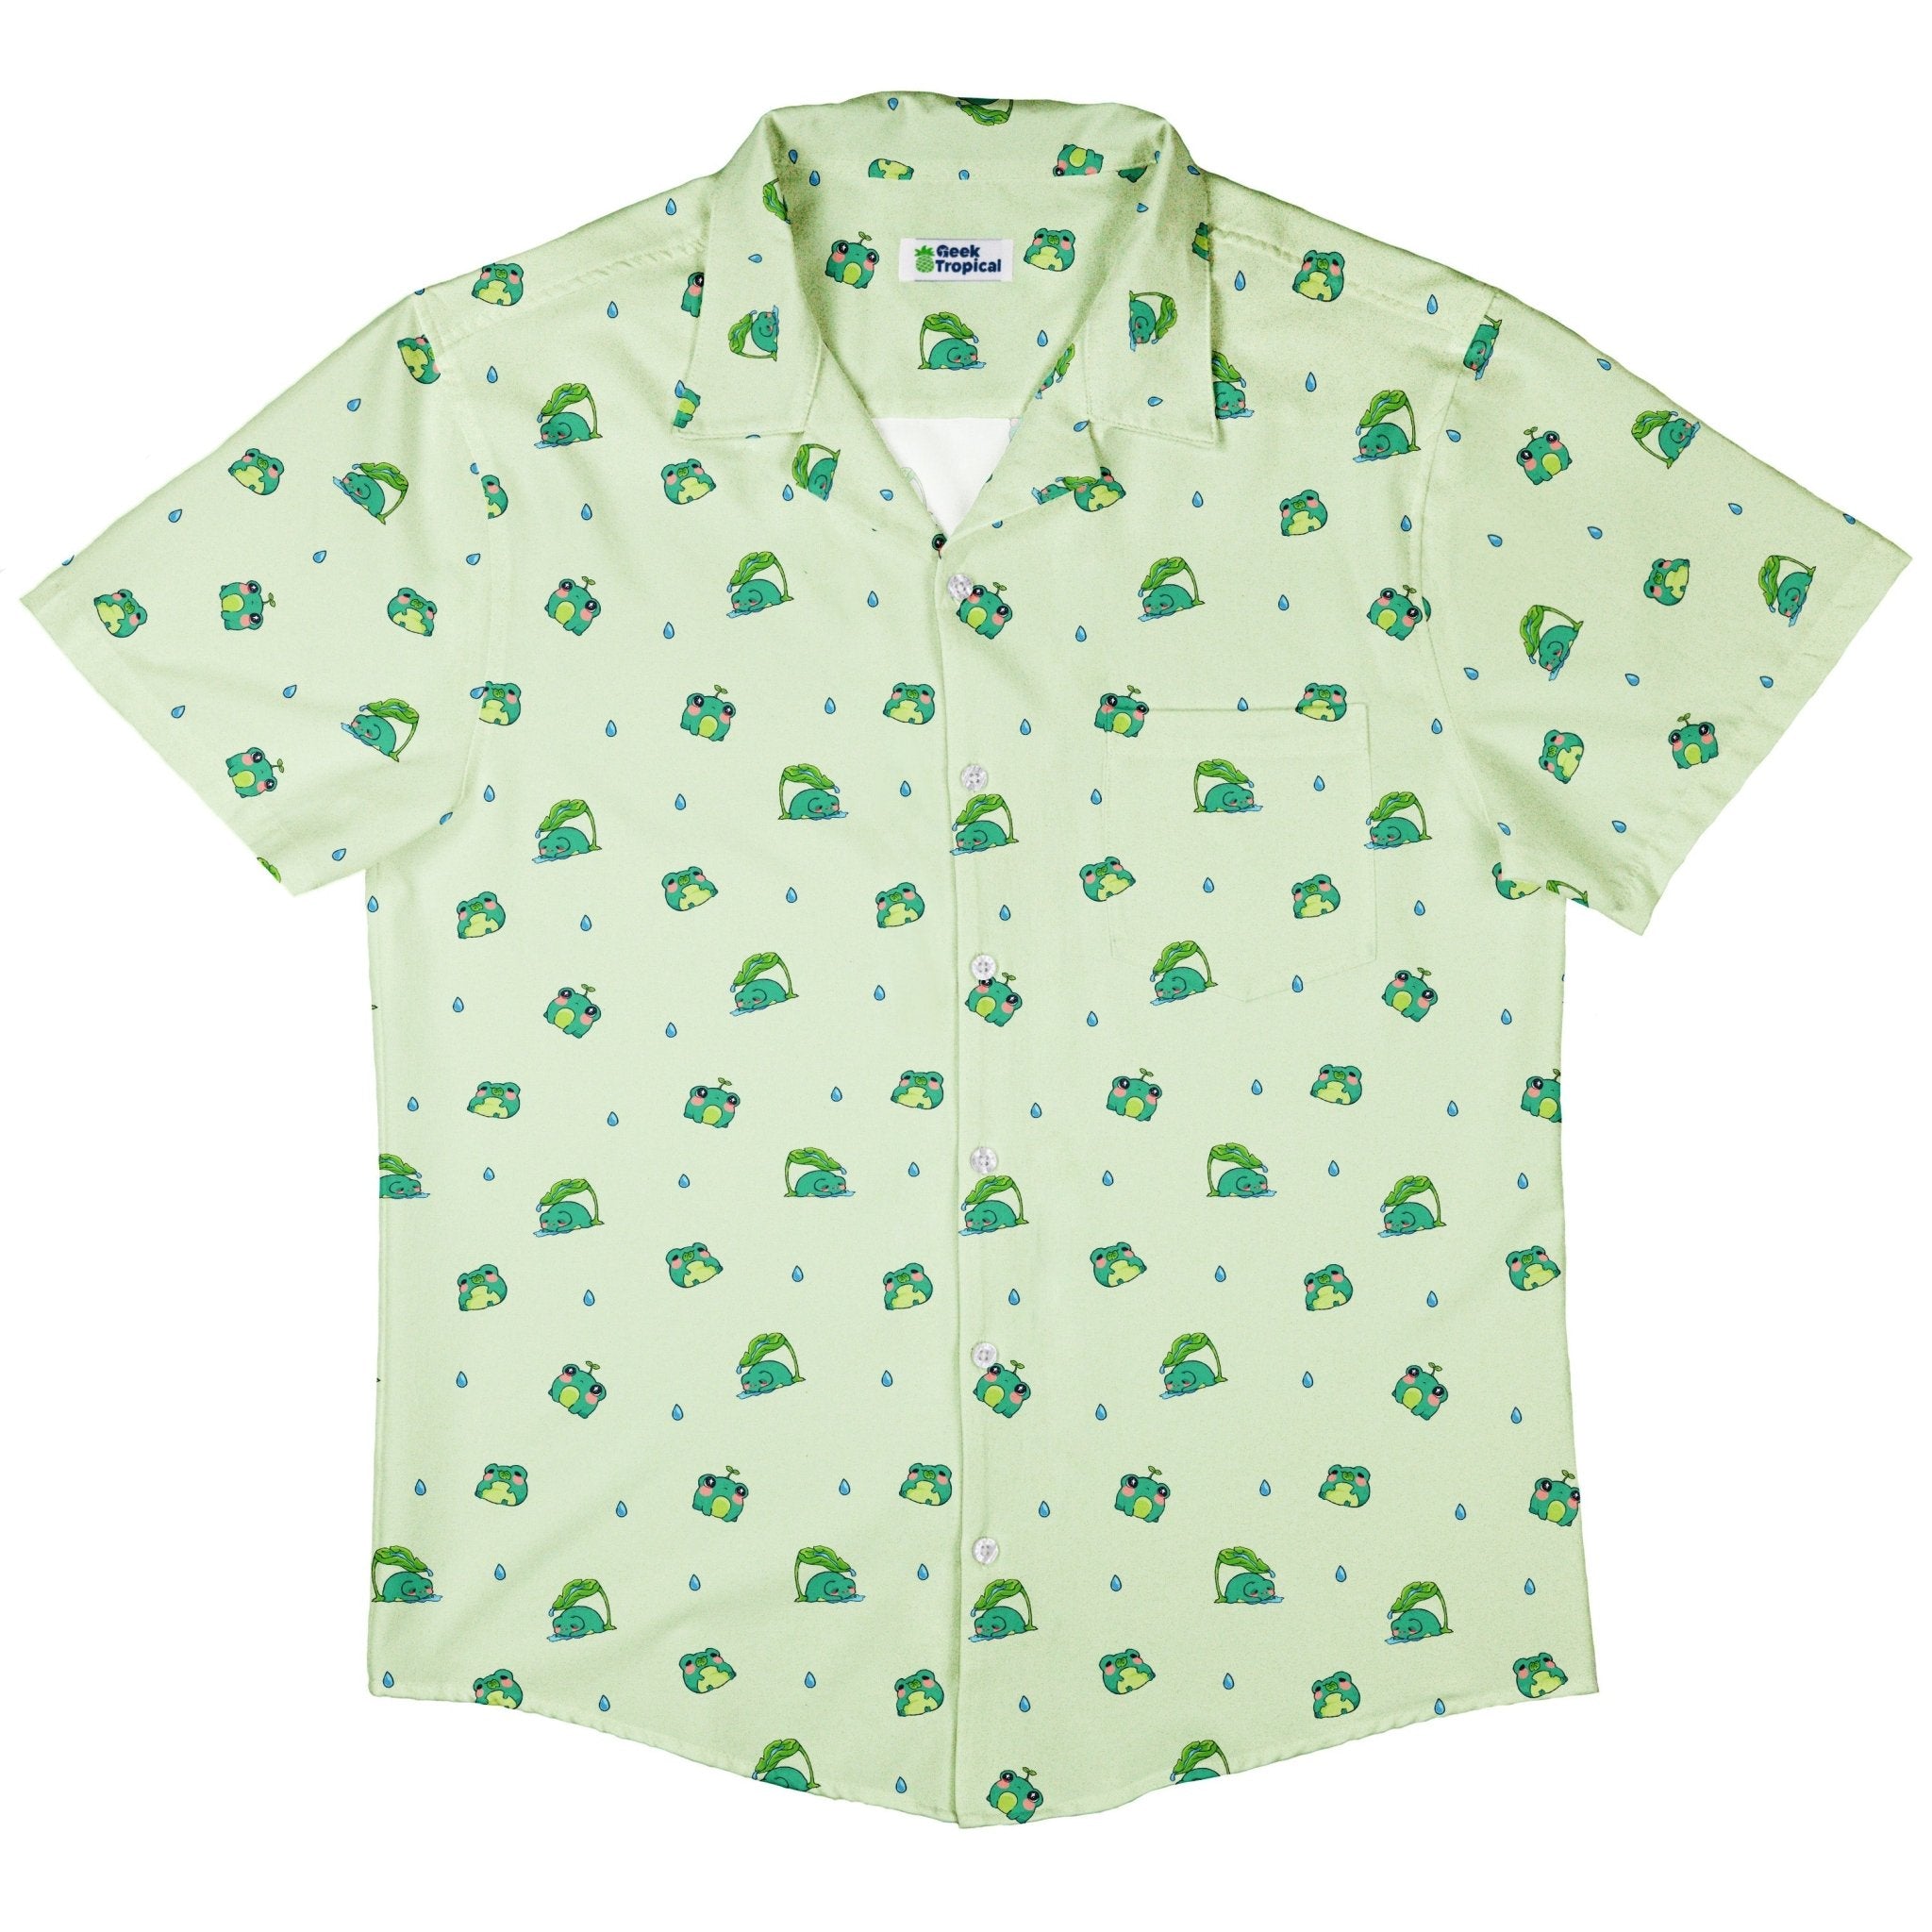 Raining Frogs Pastel Green Button Up Shirt - adult sizing - Animal Patterns - Anime